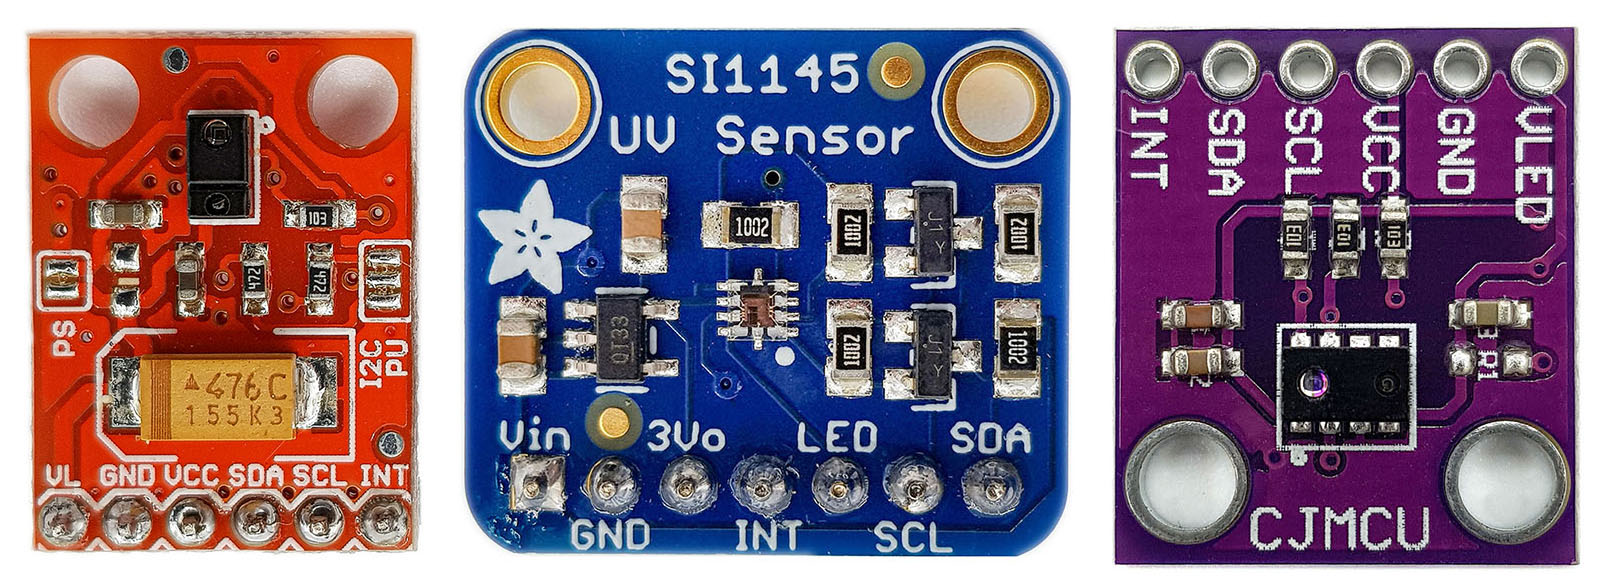 Sensor comparison - the proximity sensors APDS-9960, SI1145 and AP3216